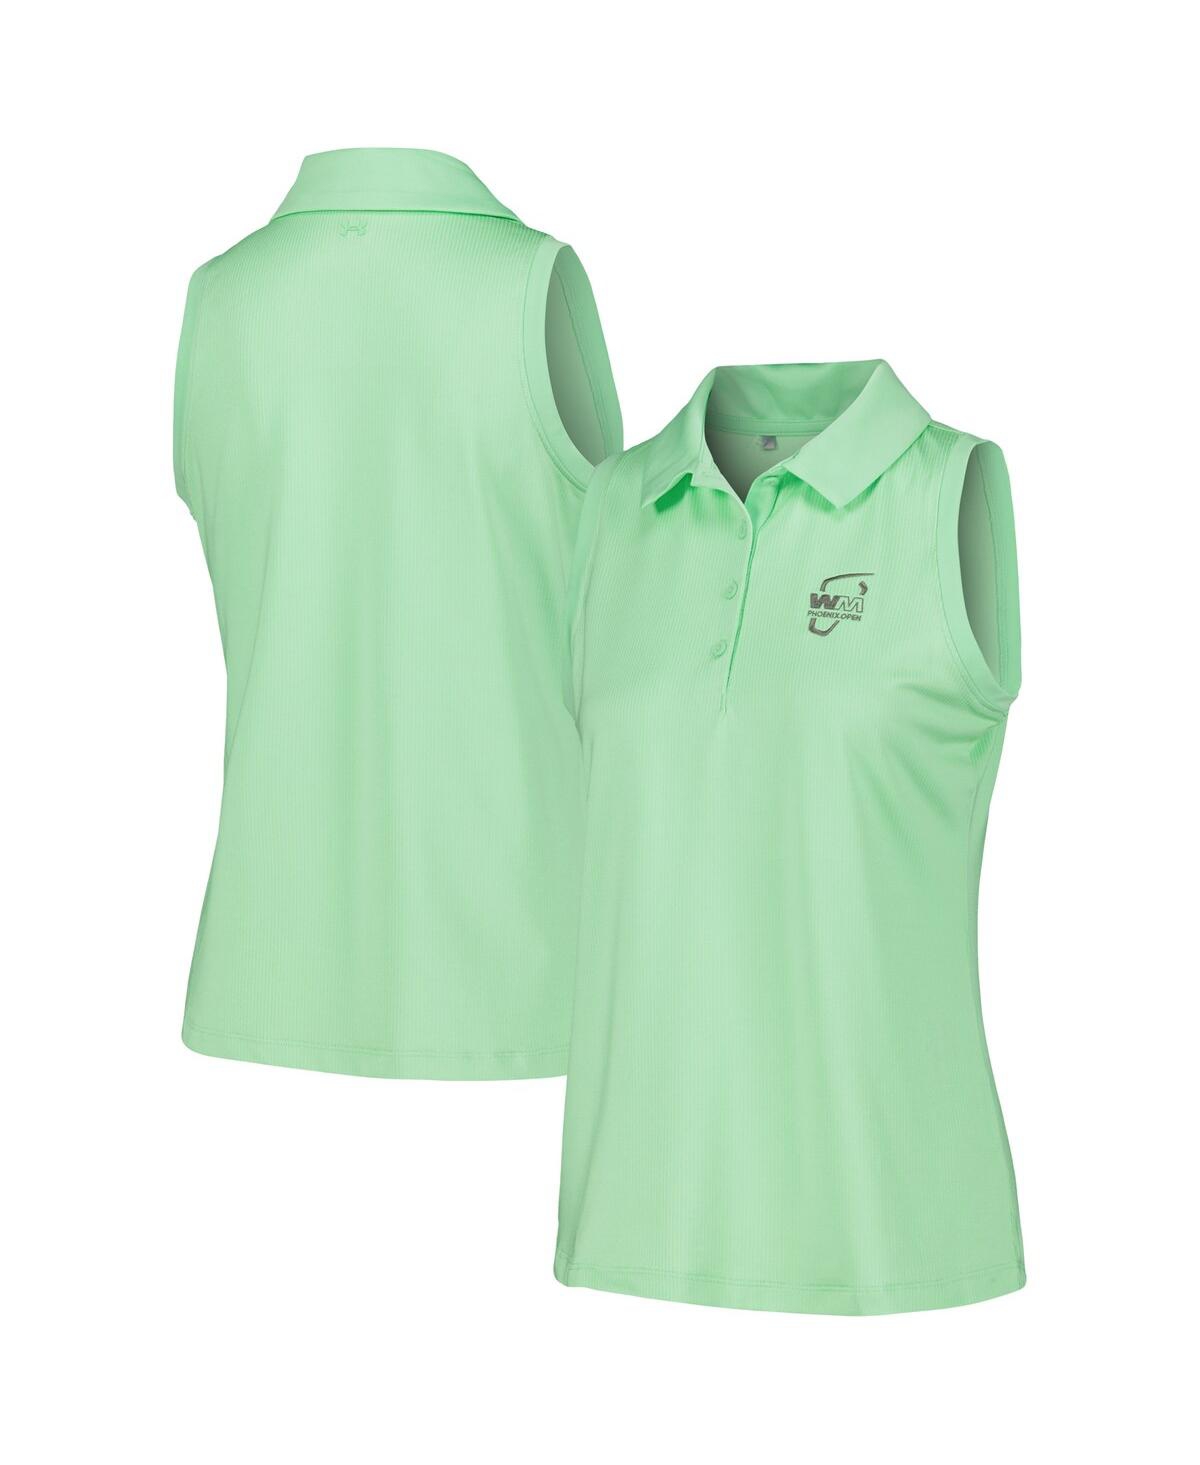 Under Armour Women's  Green Wm Phoenix Open Playoff 3.0 Pin Stripe Jacquard Sleeveless Polo Shirt